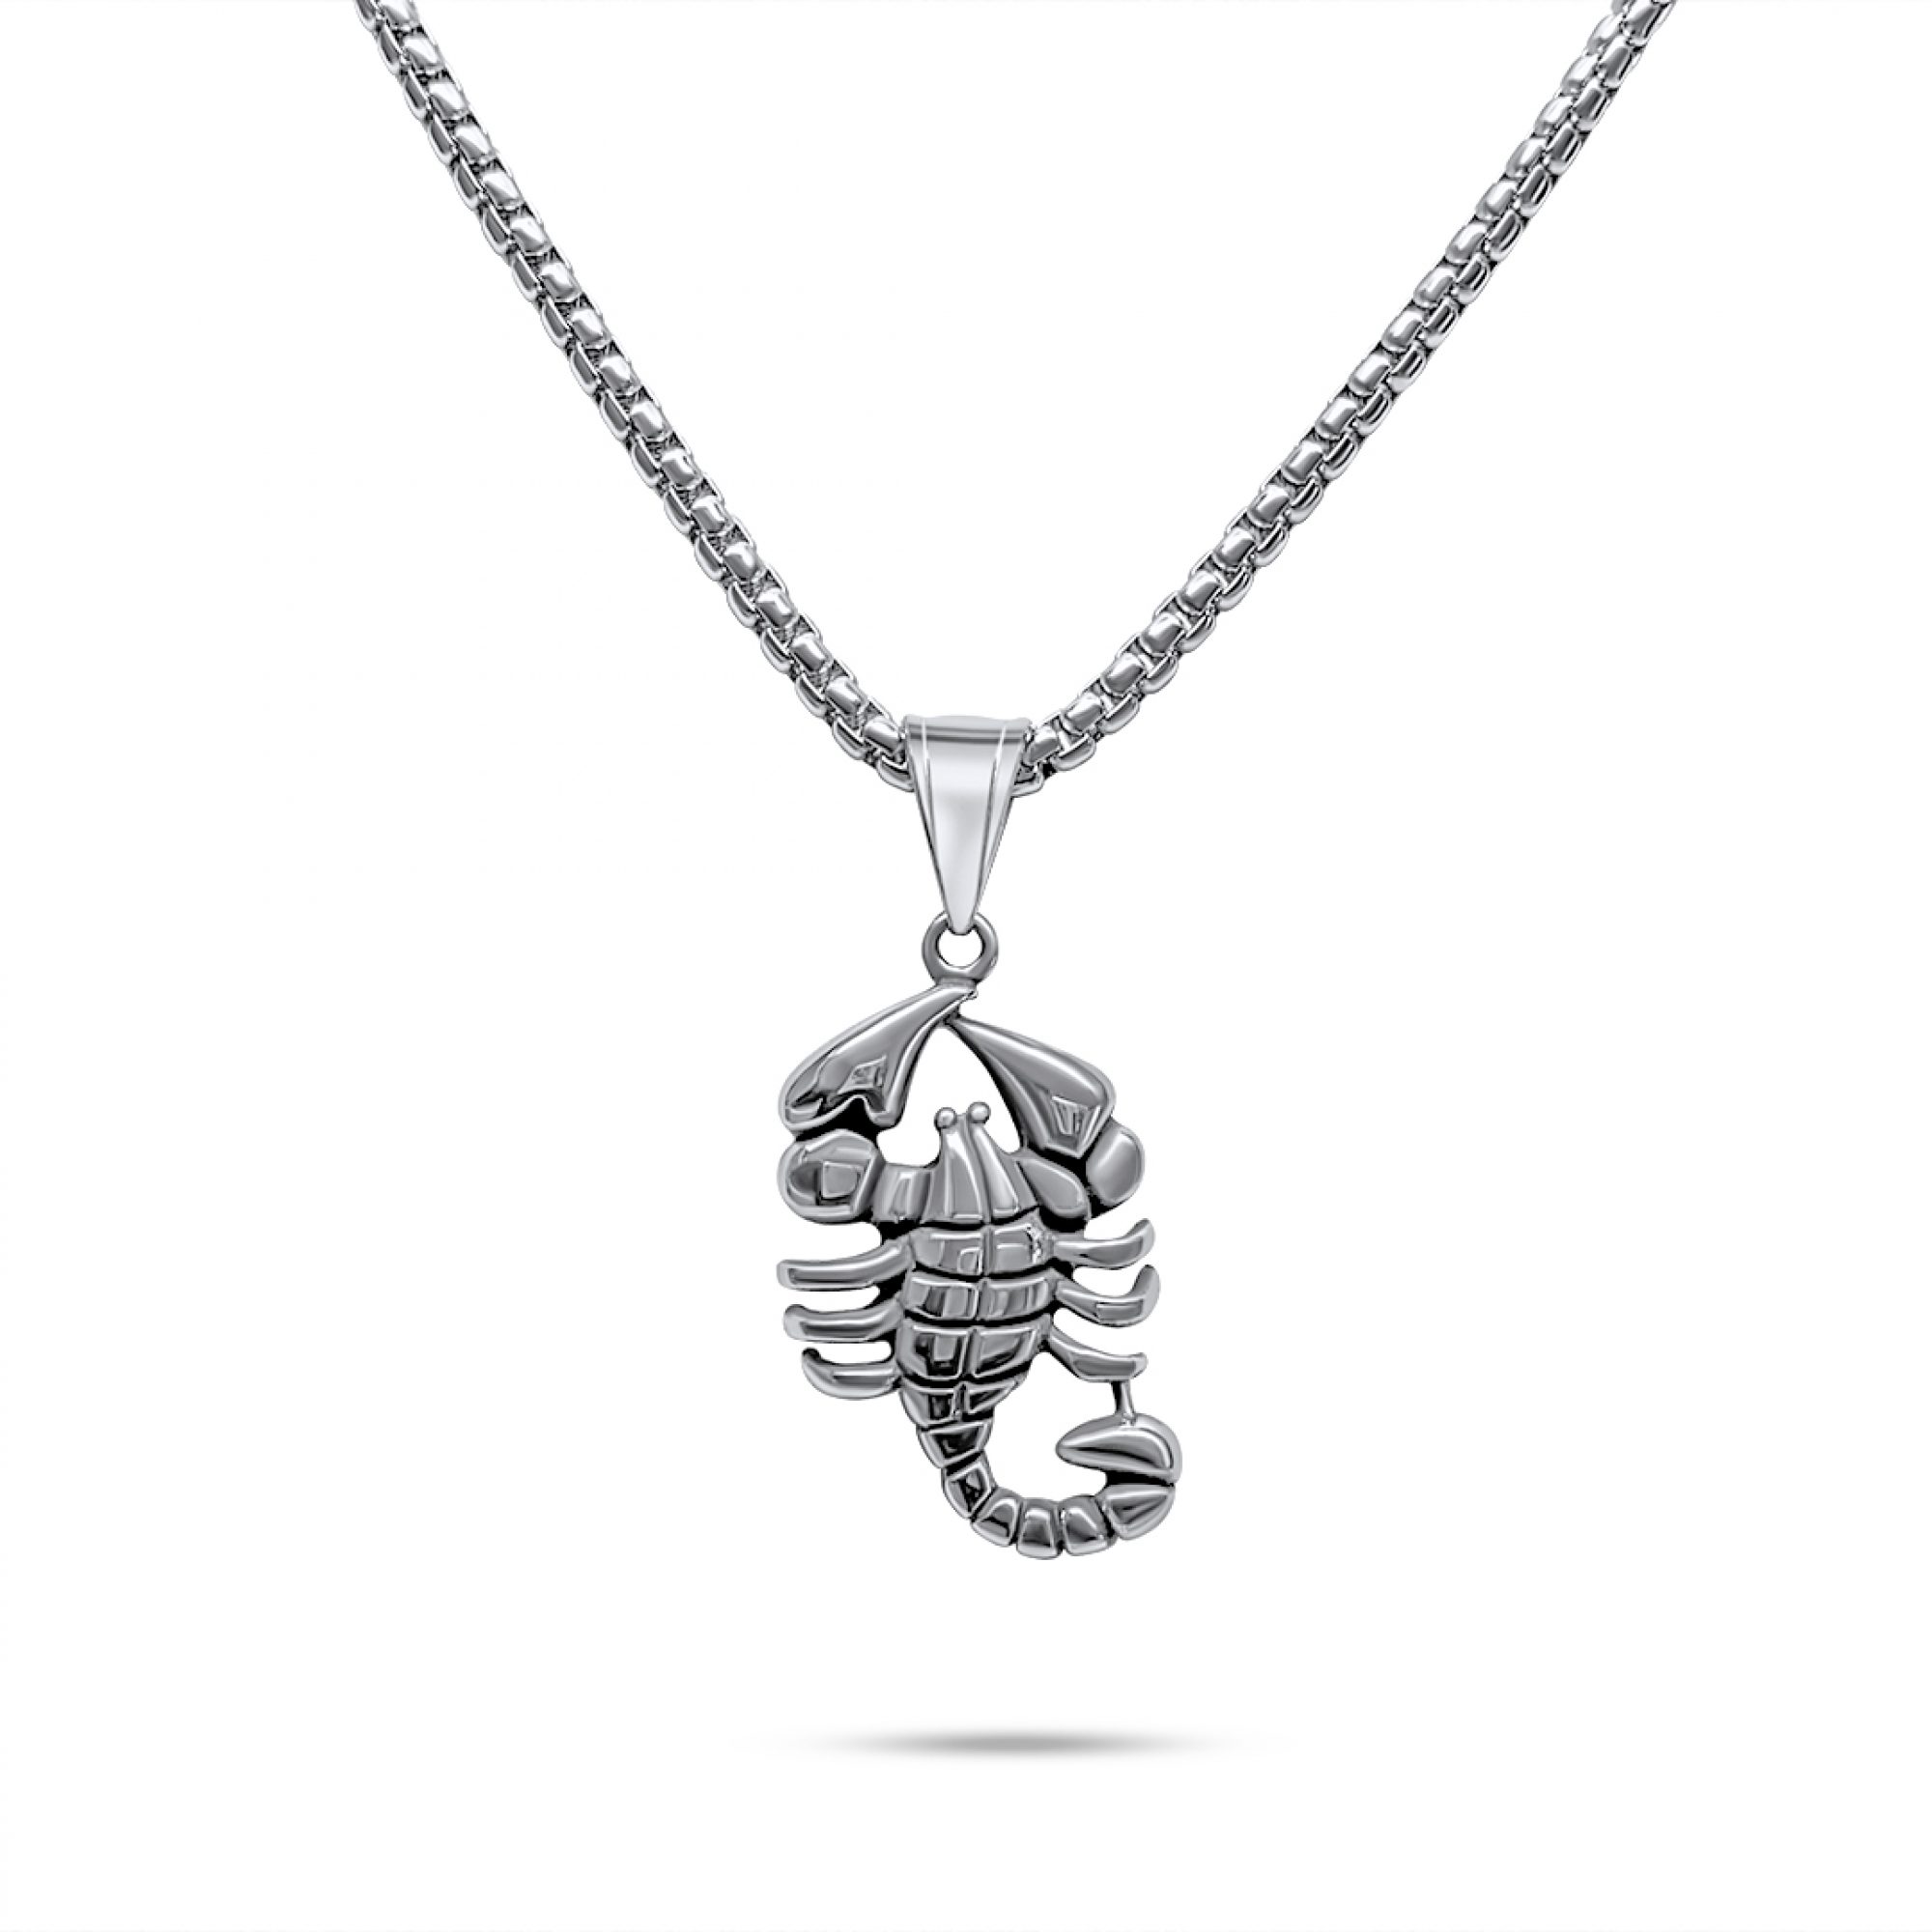 Steel scorpion necklace